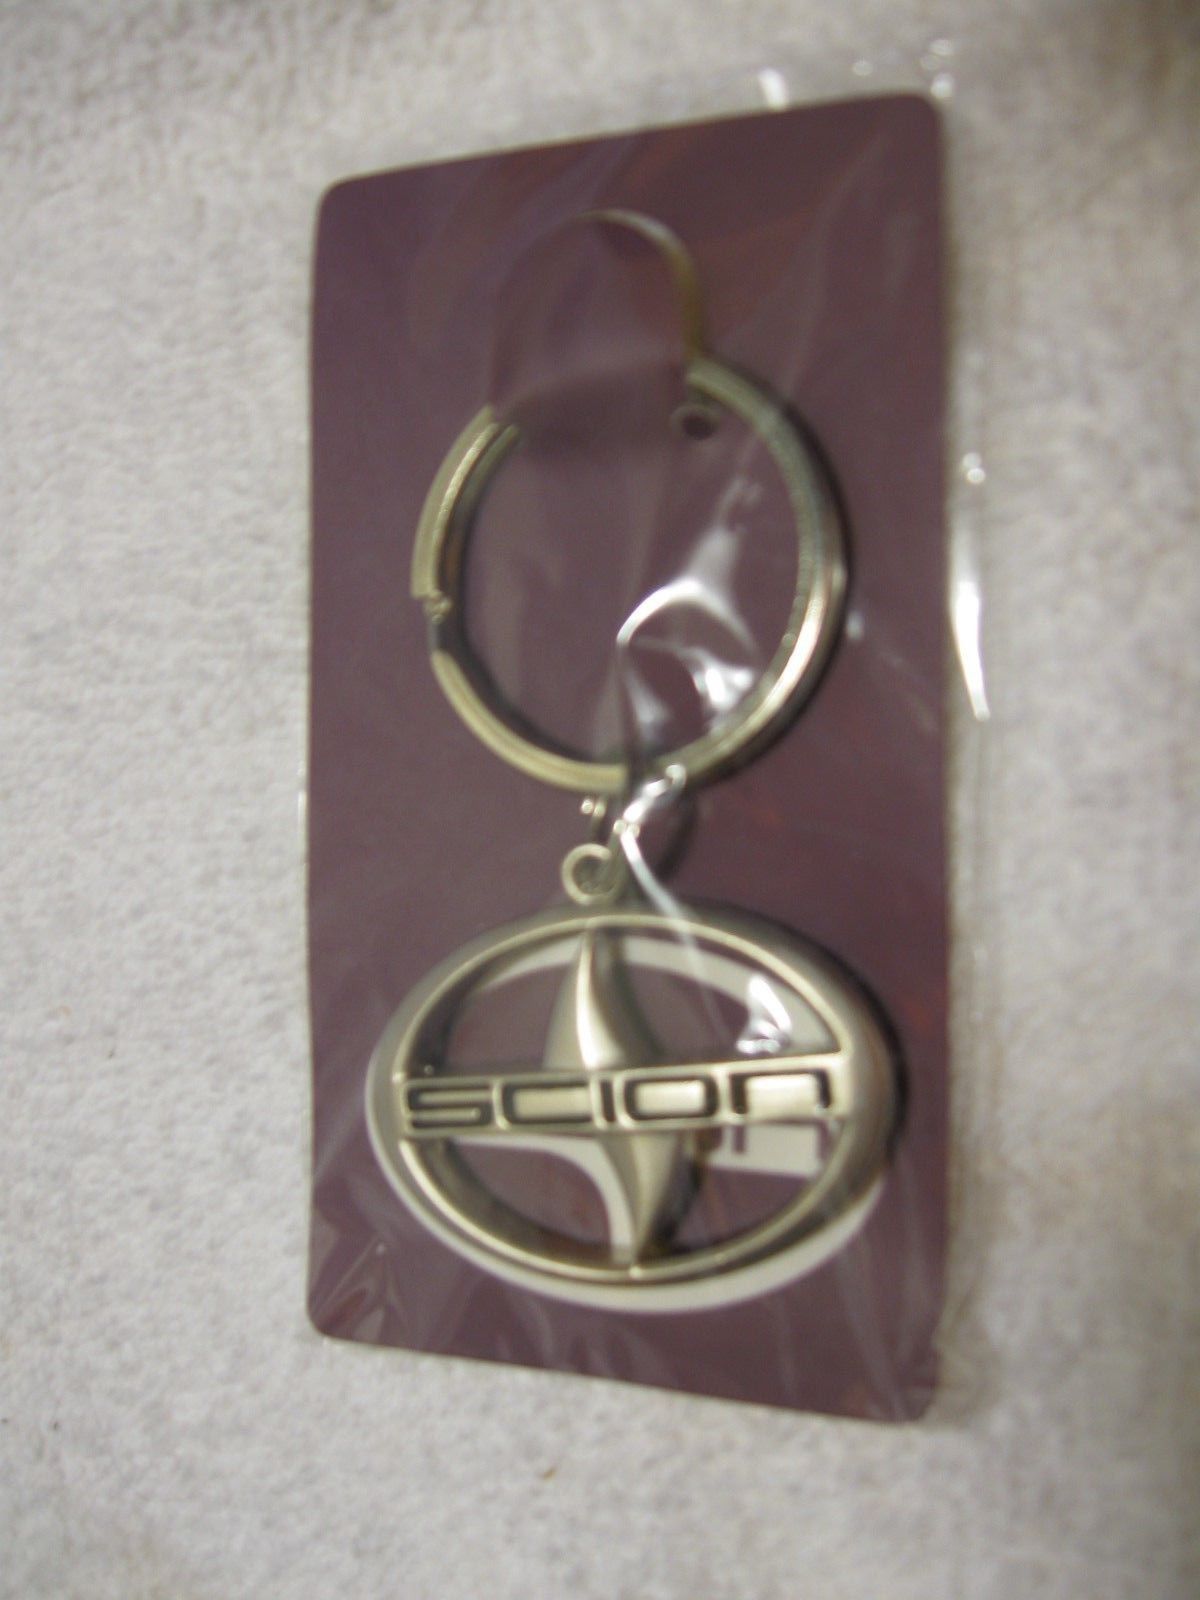 SCION Metal Key Fob-Display-Auto Collectible-Toyota-Japanese Car Manufacturer!!! - $12.95